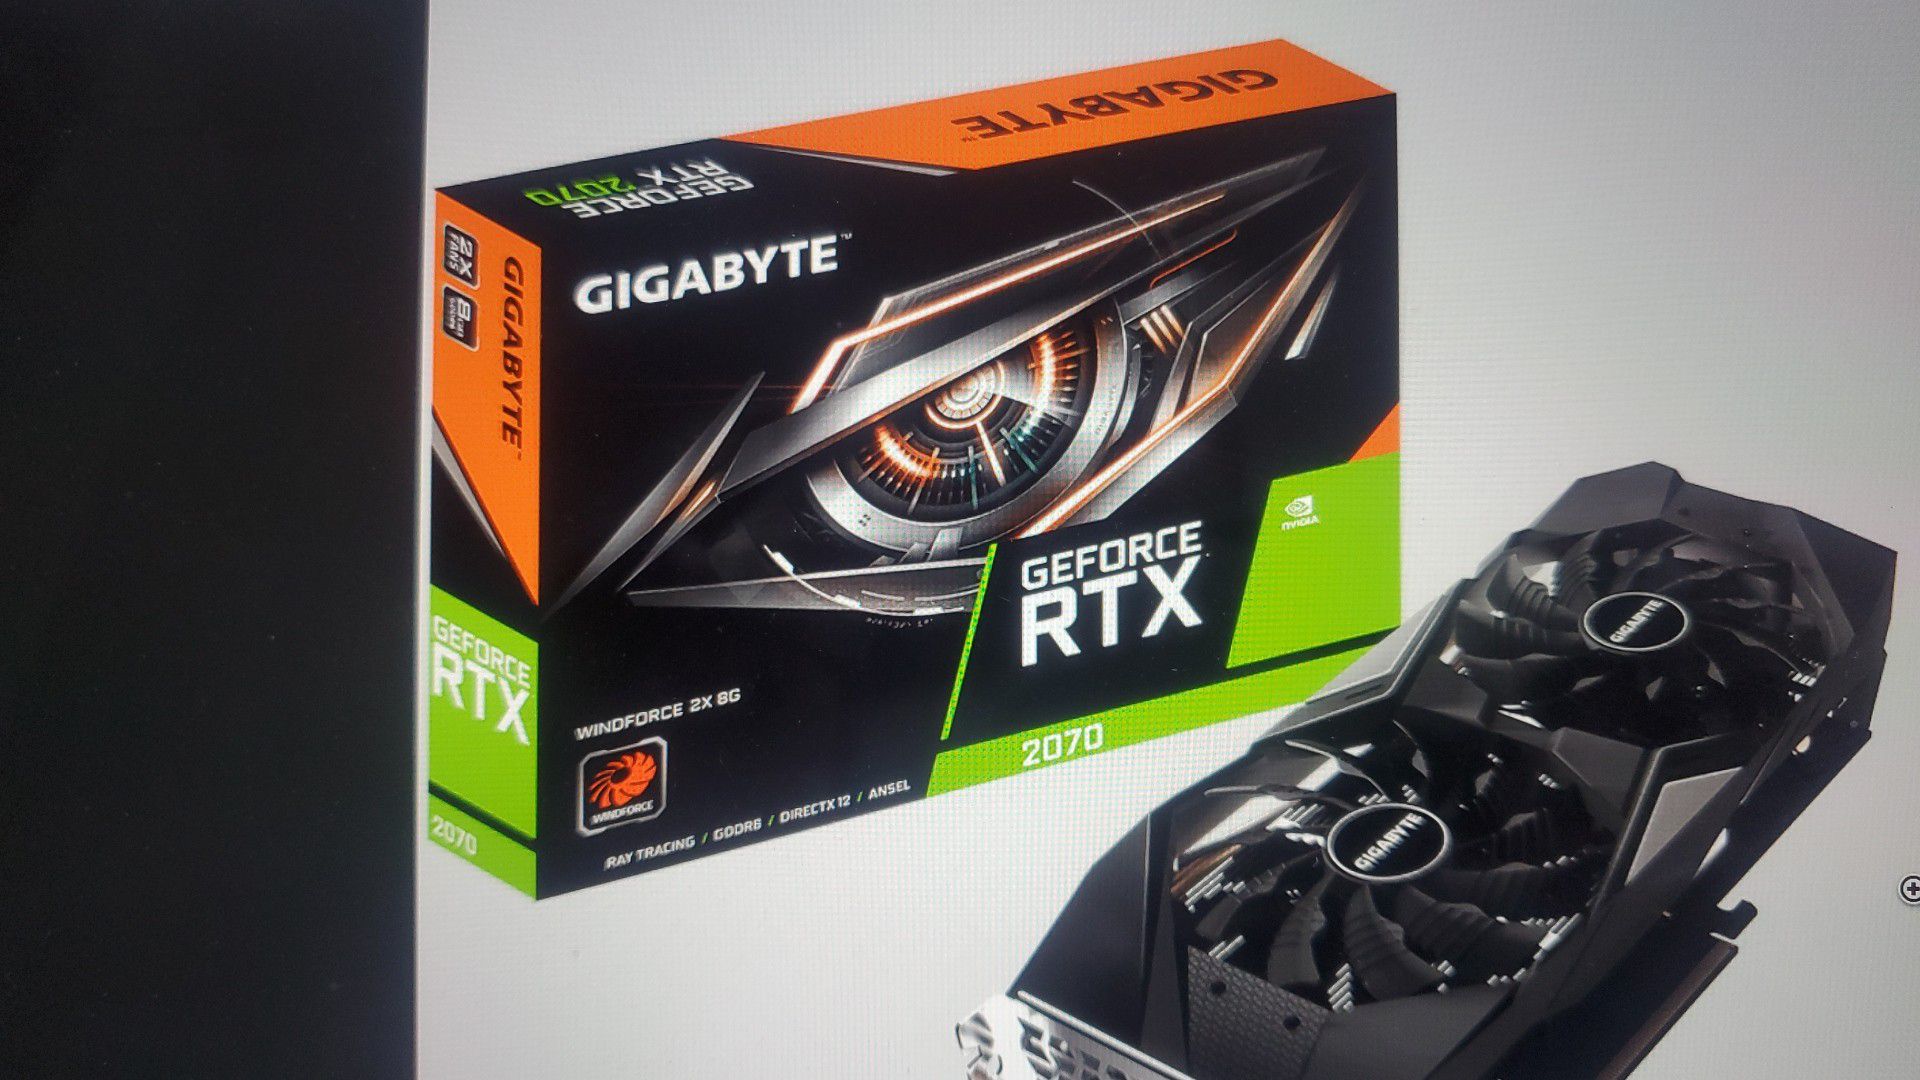 Gigabyte RTX 2070 Brand New Sealed